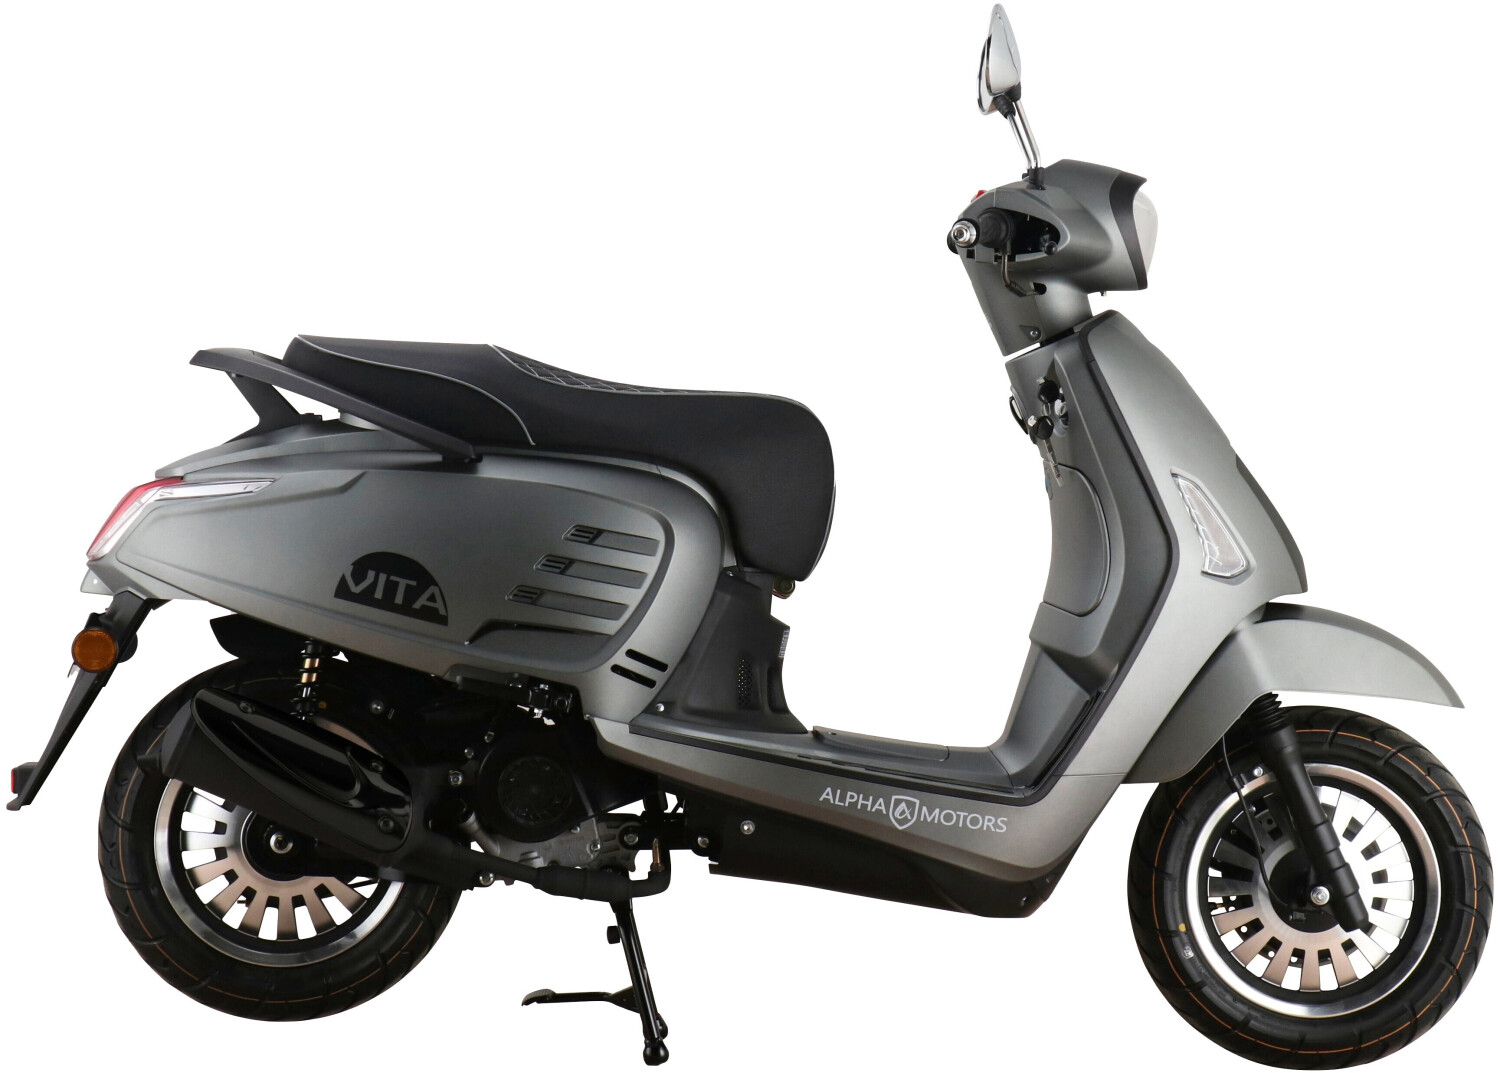 Alpha Motors Motorroller Vita 50 ccm, mattgrau ab 1.884,05 € |  Preisvergleich bei